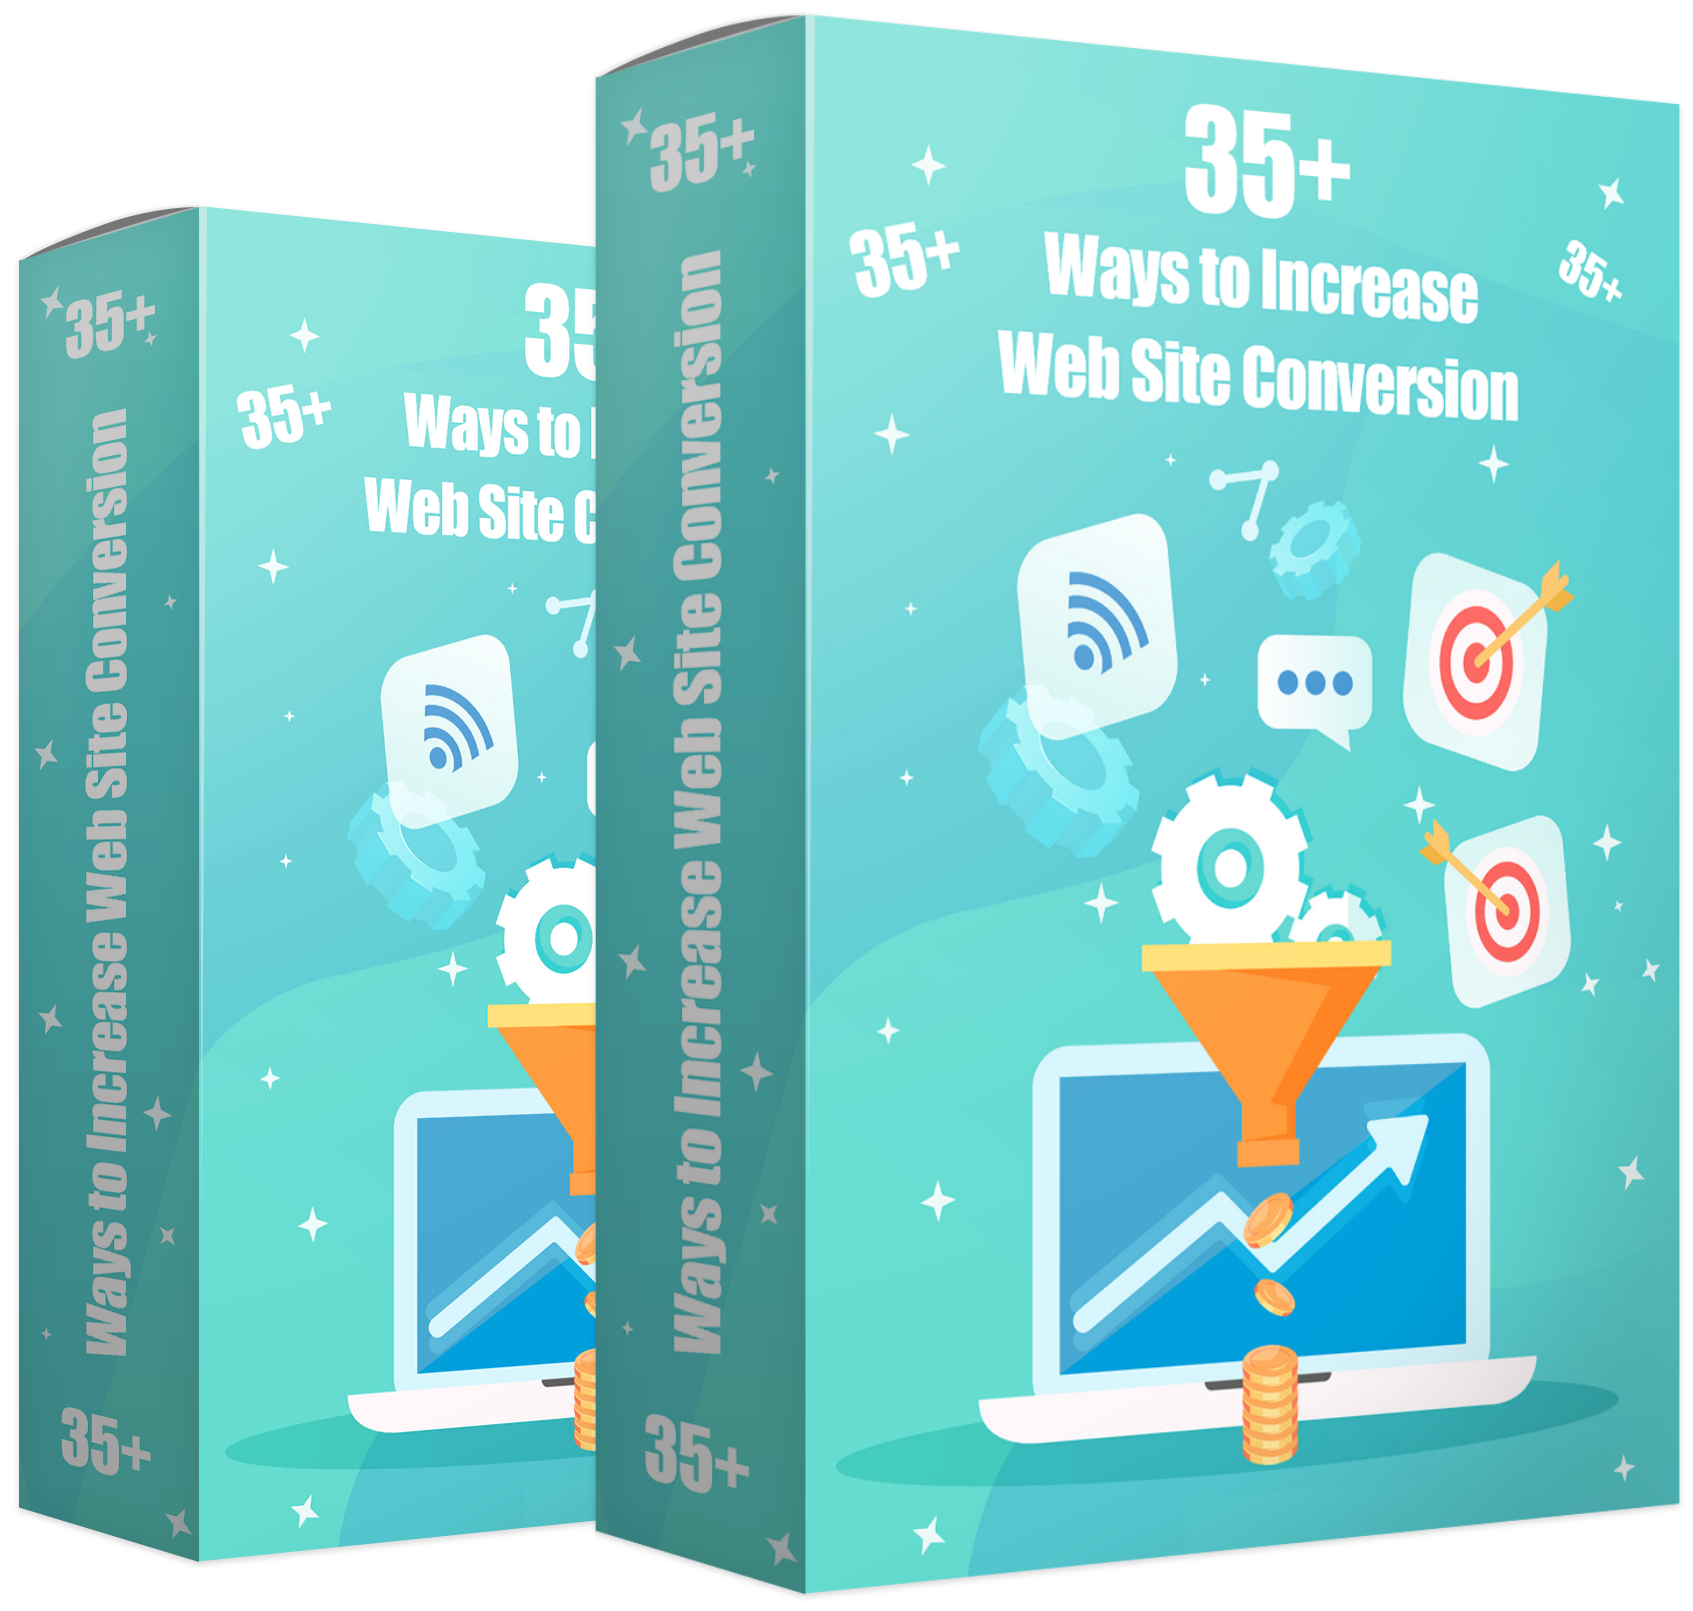 135+ Ways to Increase Web Site Conversion